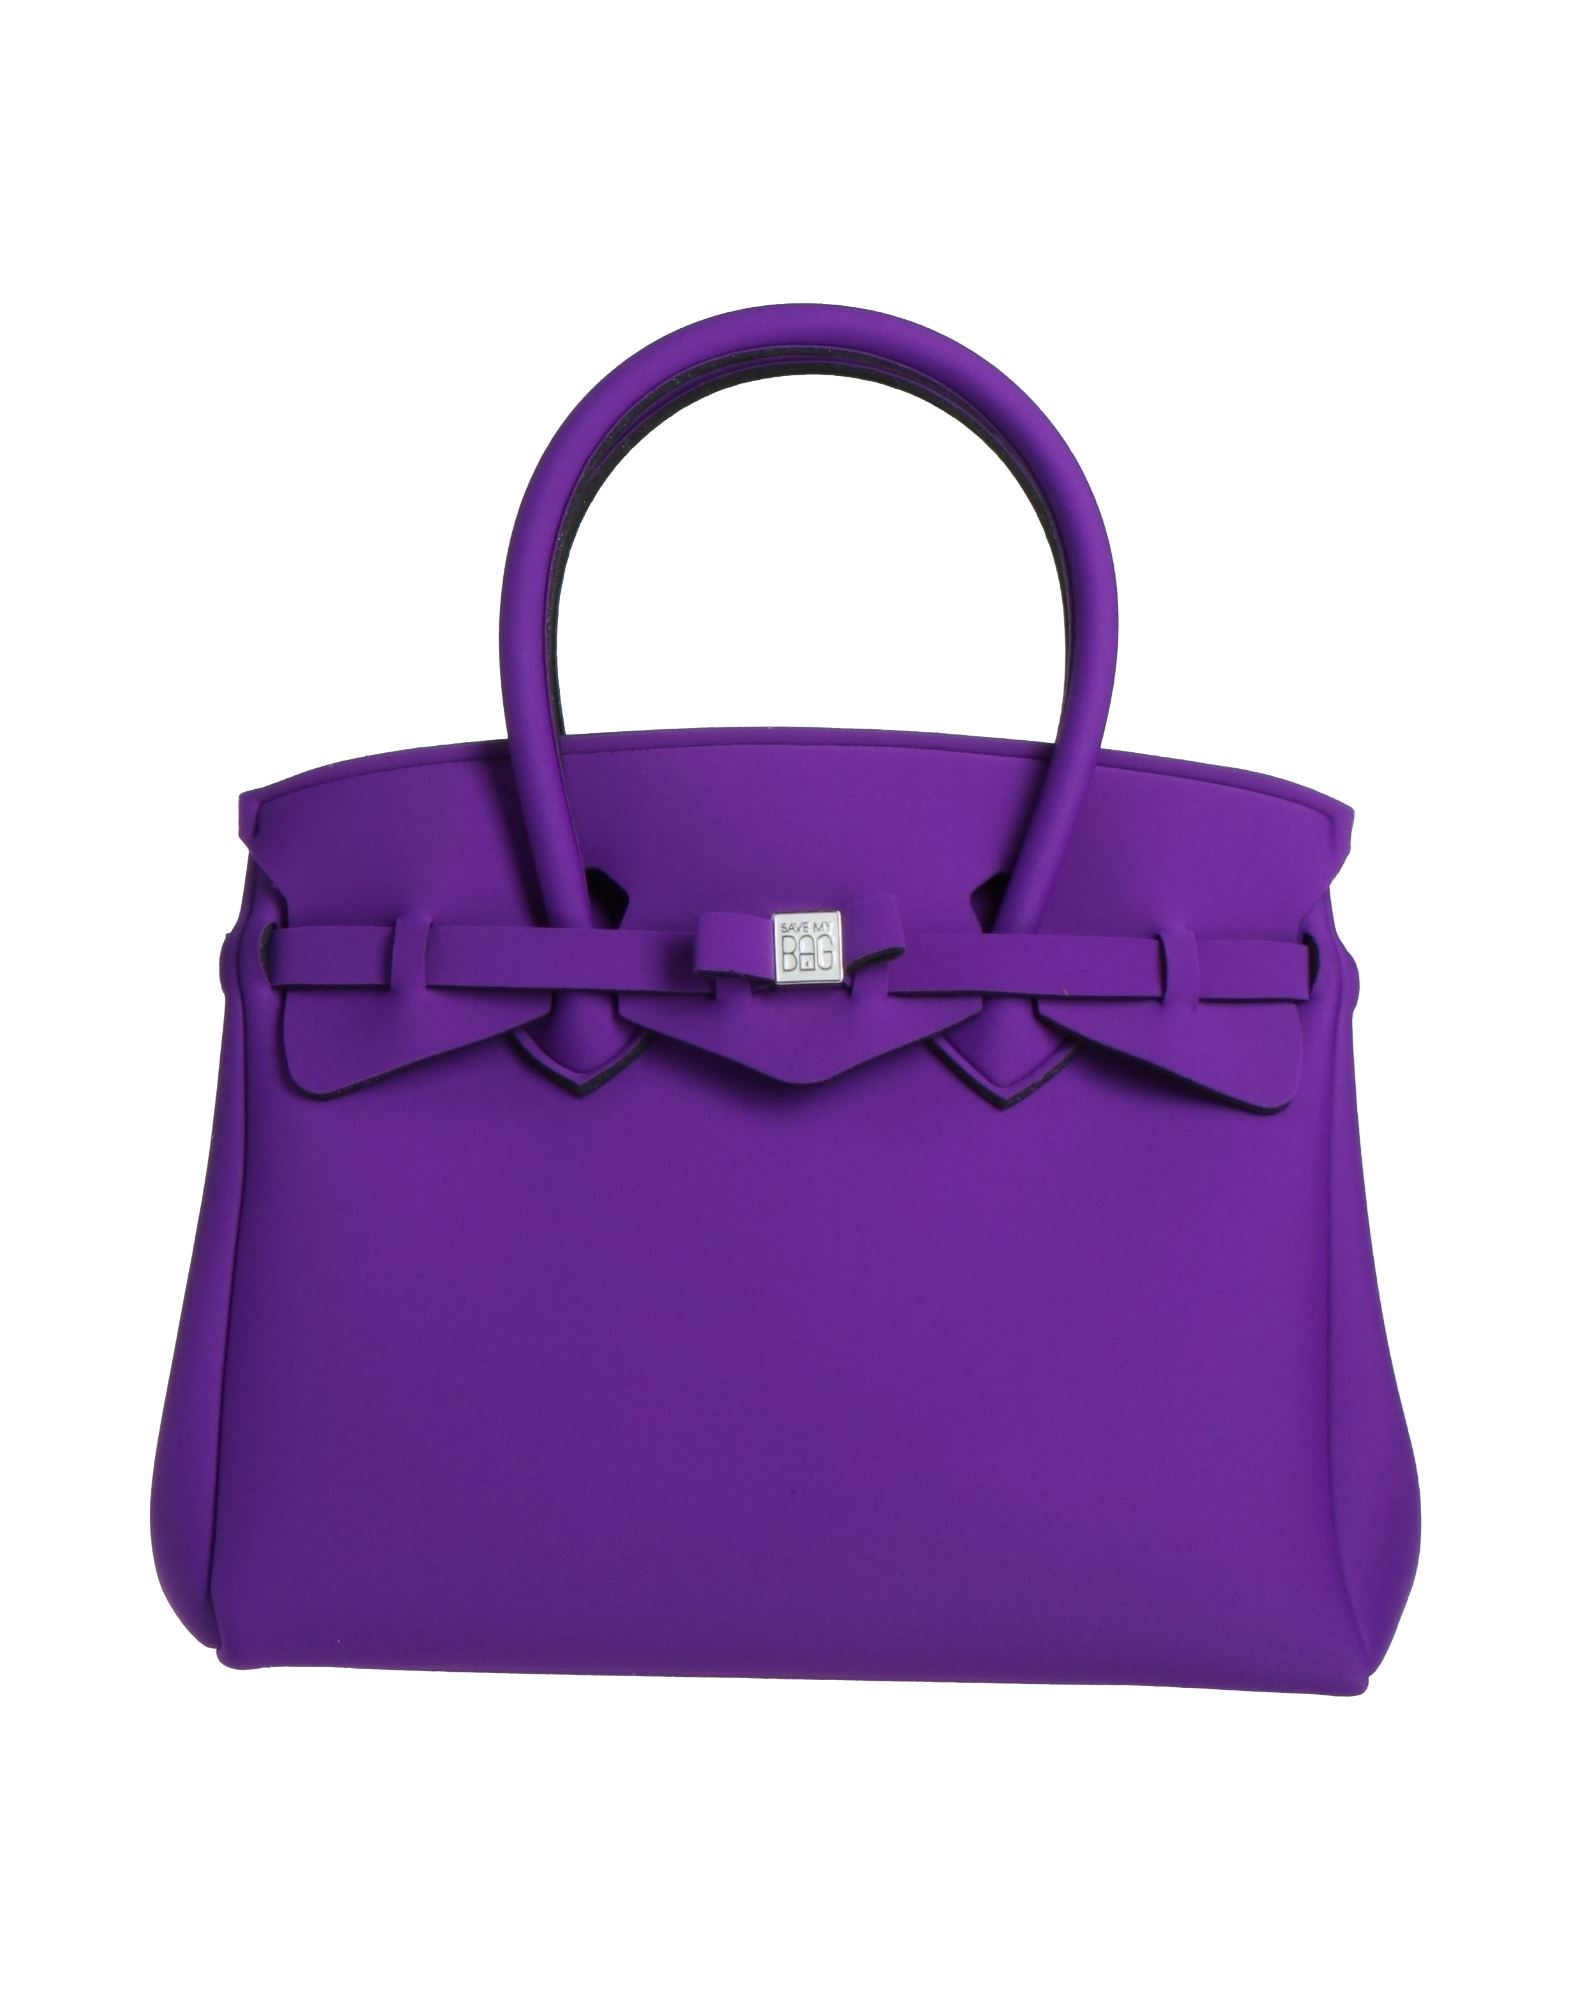 Save My Bag Handbags In Purple